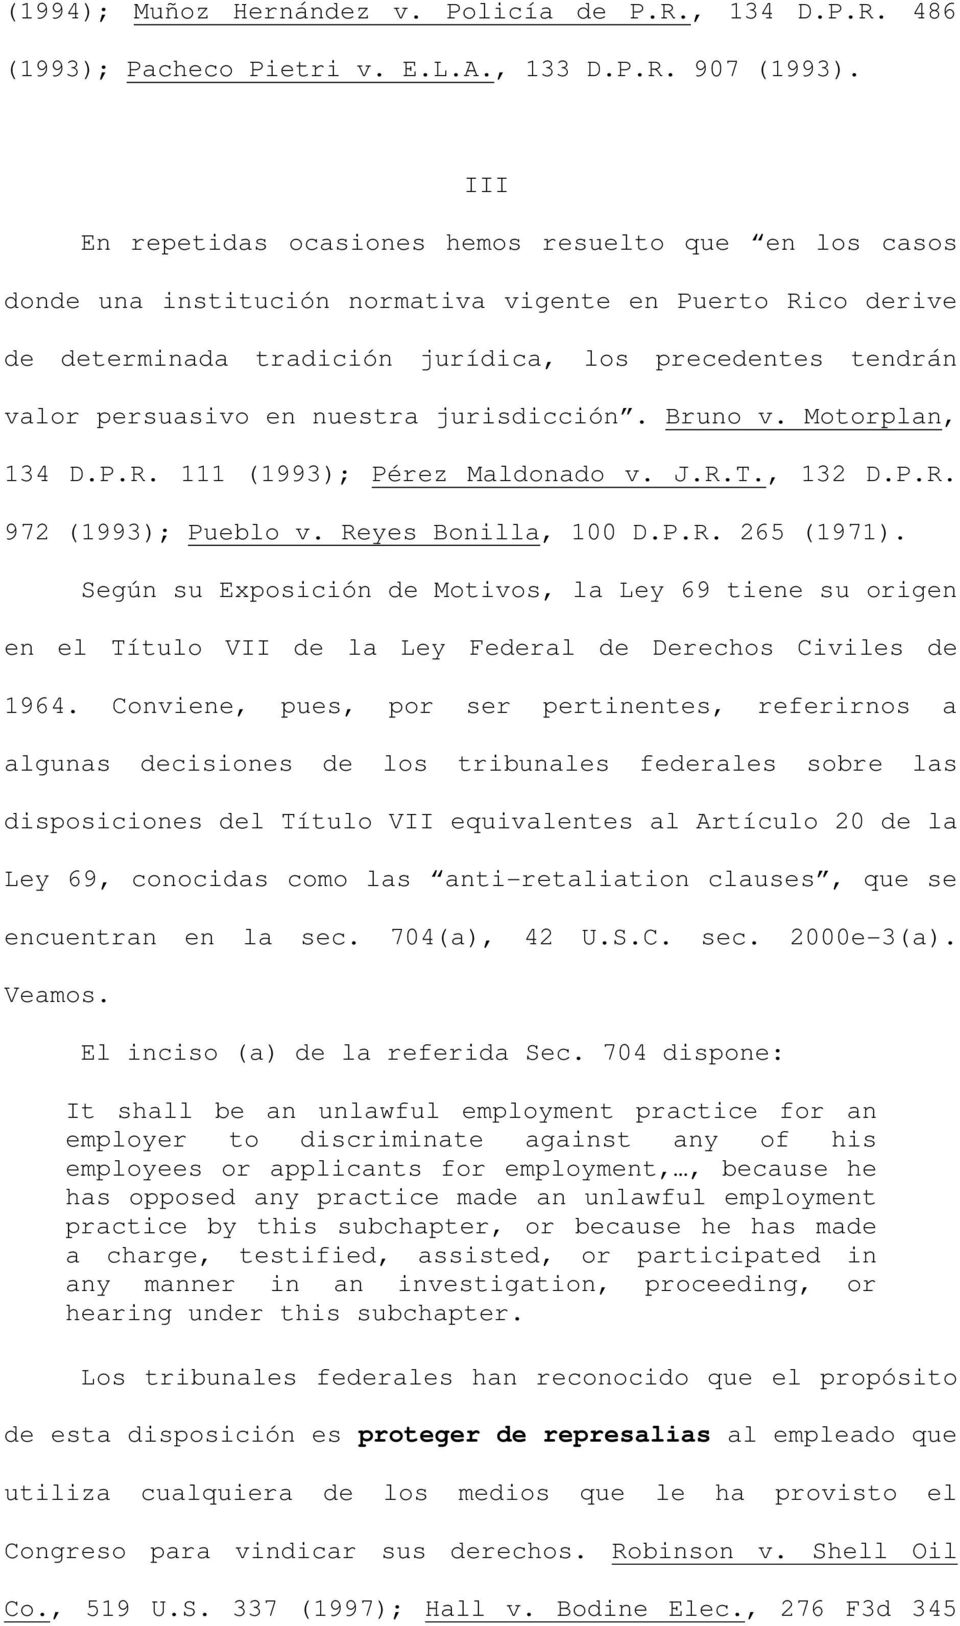 nuestra jurisdicción. Bruno v. Motorplan, 134 D.P.R. 111 (1993); Pérez Maldonado v. J.R.T., 132 D.P.R. 972 (1993); Pueblo v. Reyes Bonilla, 100 D.P.R. 265 (1971).